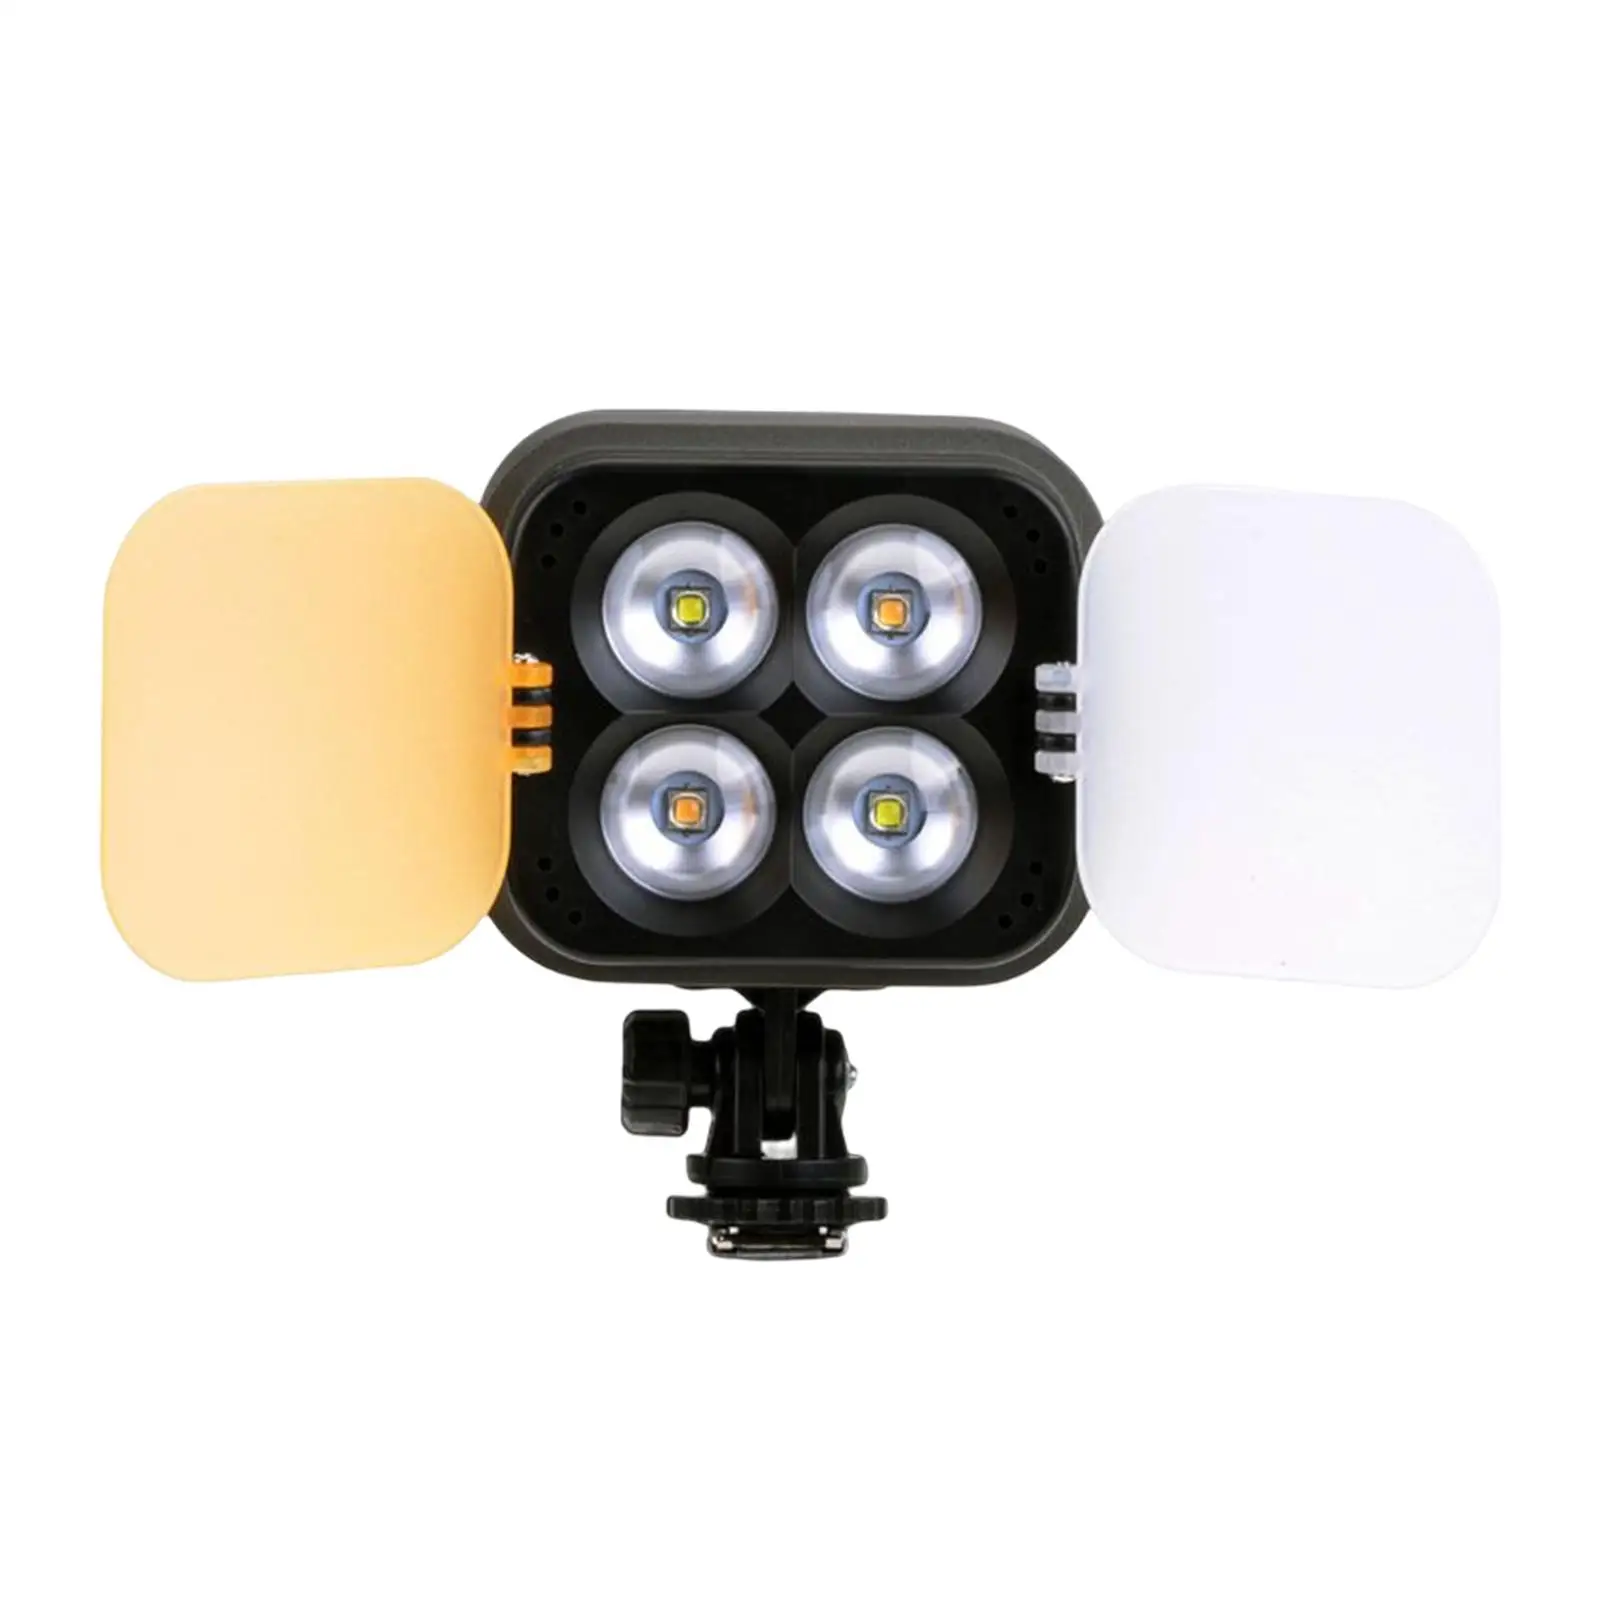 Portable LED Video Light Camera Fill Light Lighting Photography LED Light LED Lamp Beads for Product Shooting Interview Lighting